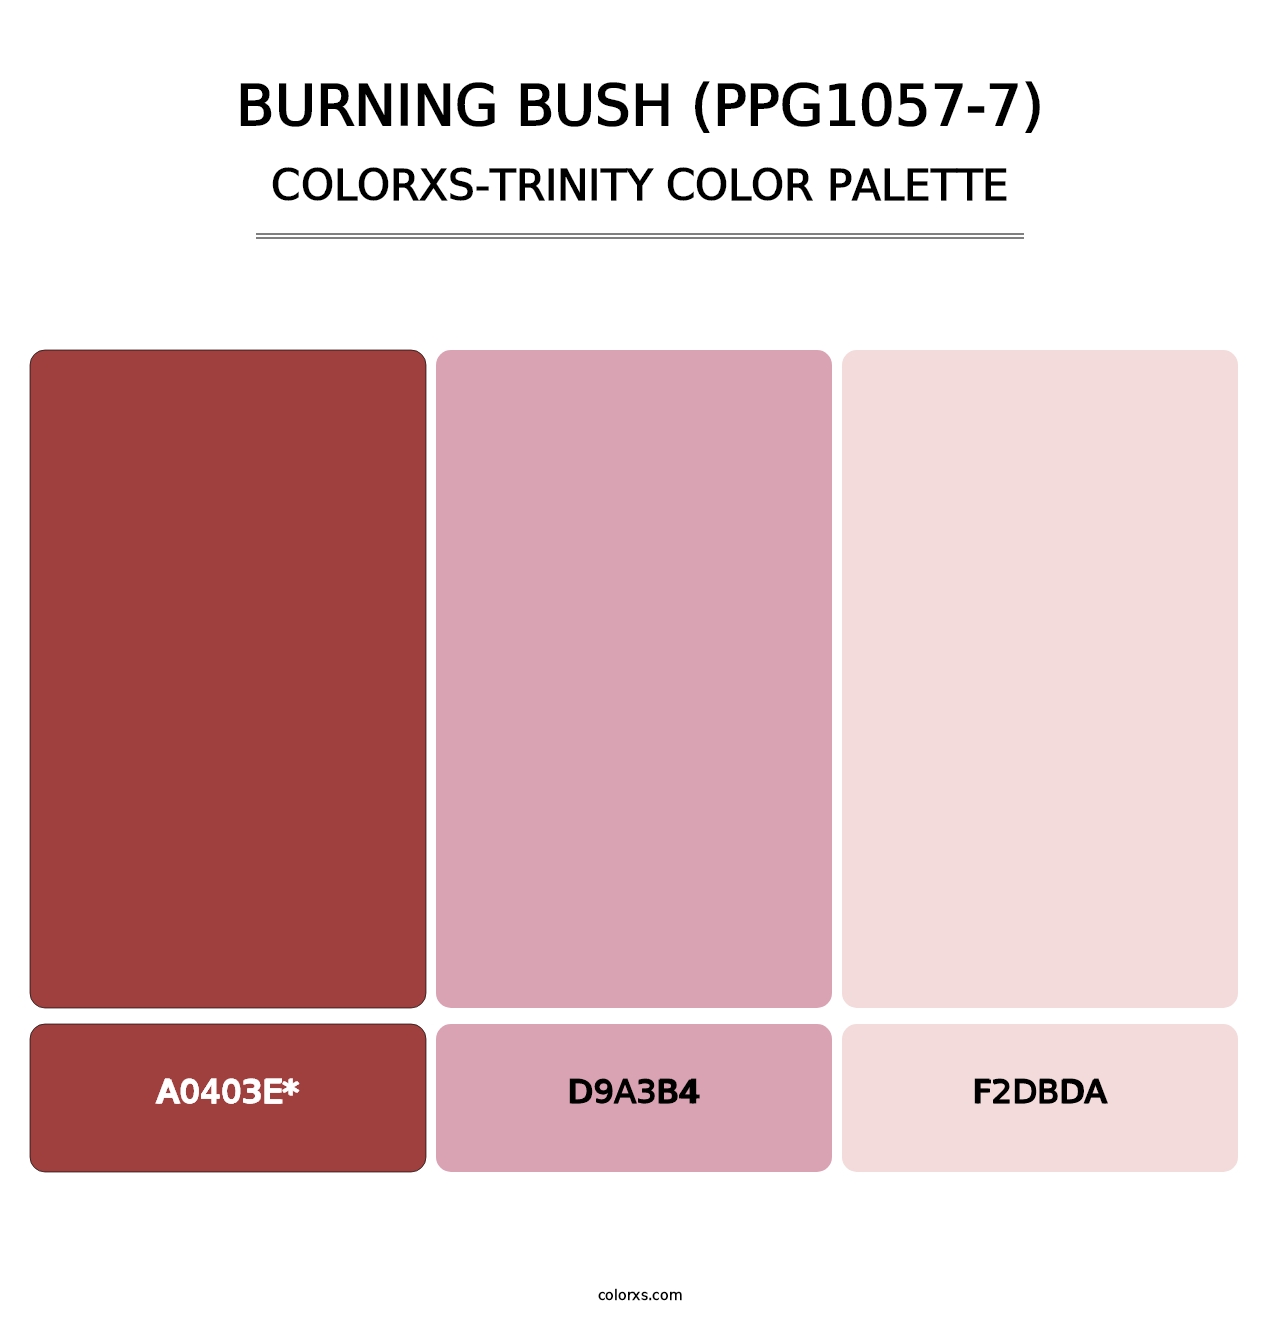 Burning Bush (PPG1057-7) - Colorxs Trinity Palette